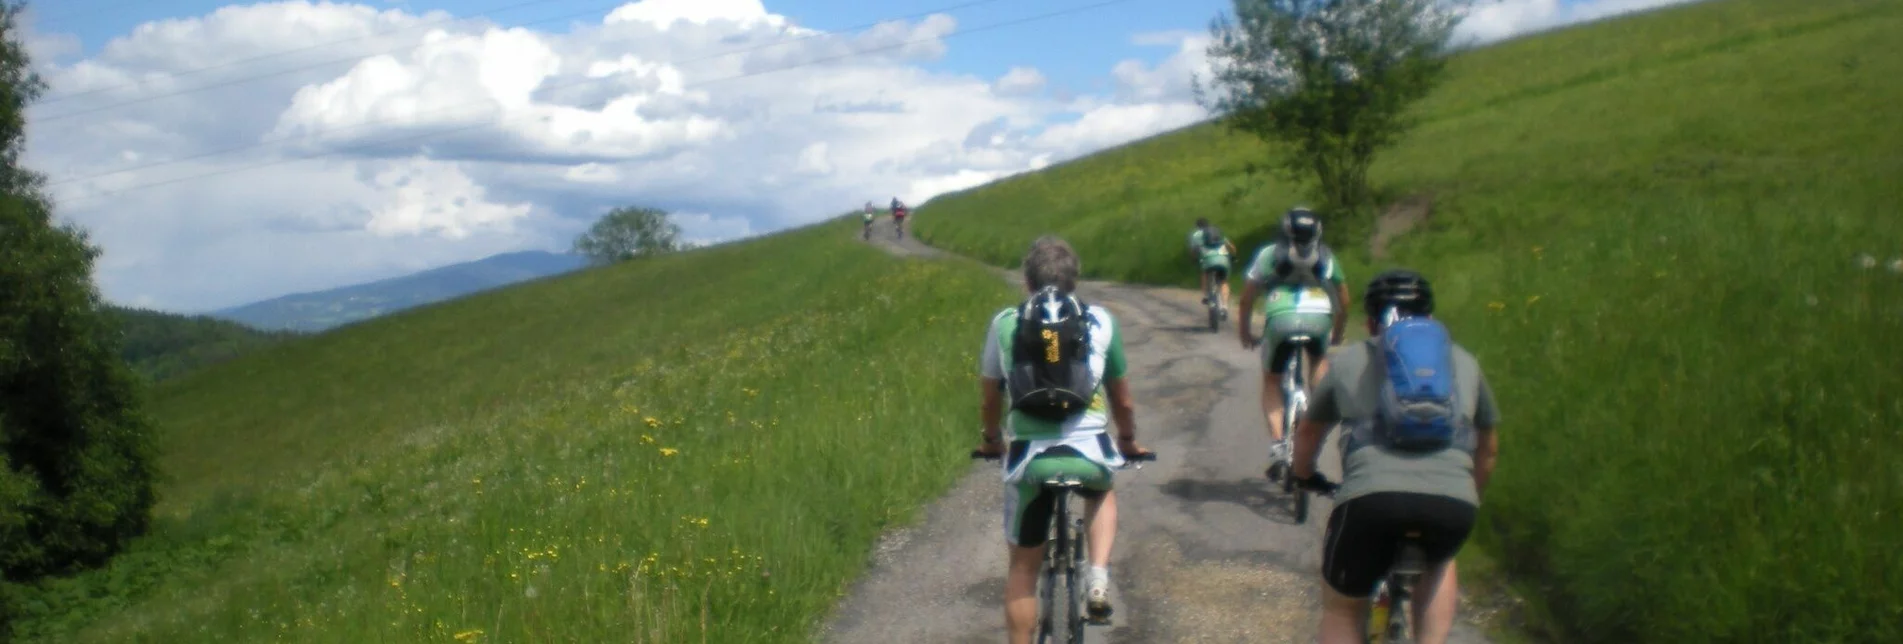 Mountainbike GEMYSAG-Fitness-Trail in der Lactosan Sportarena - Touren-Impression #1 | © Hans Hollerer